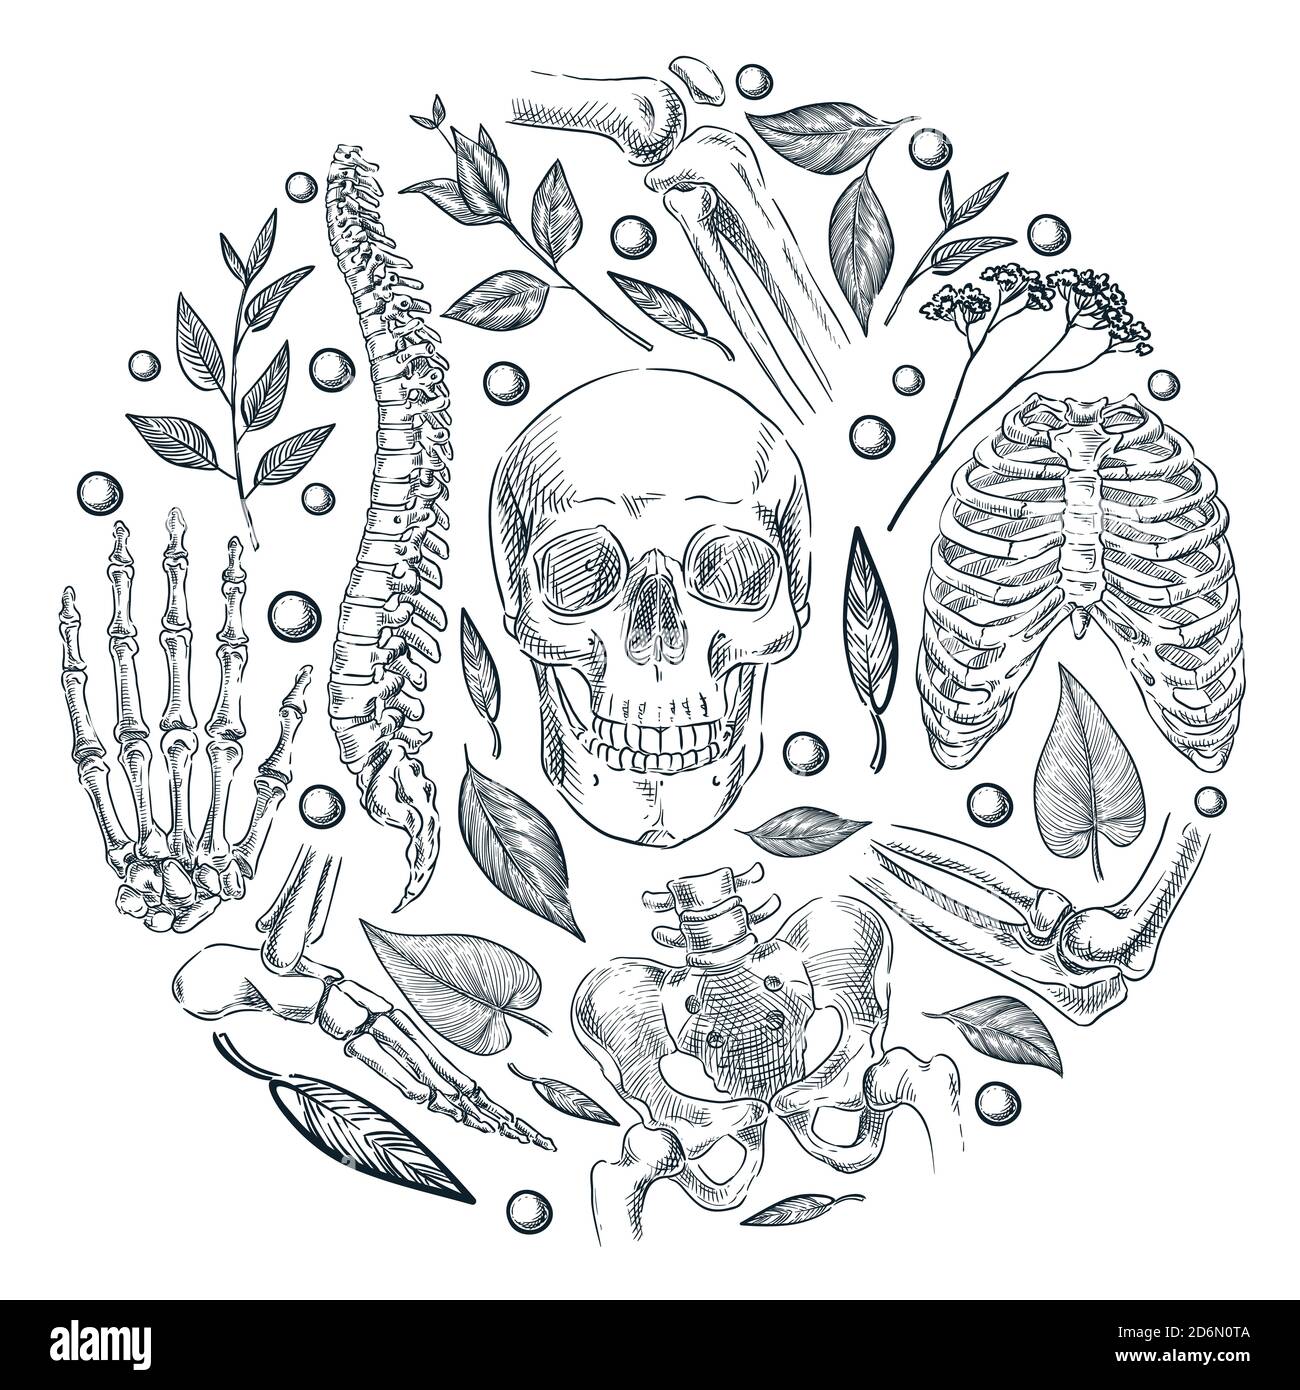 Human skeleton, bones and joints medical poster or label design template. Vector sketch illustration. Natural organic orthopedics treatment. Stock Vector